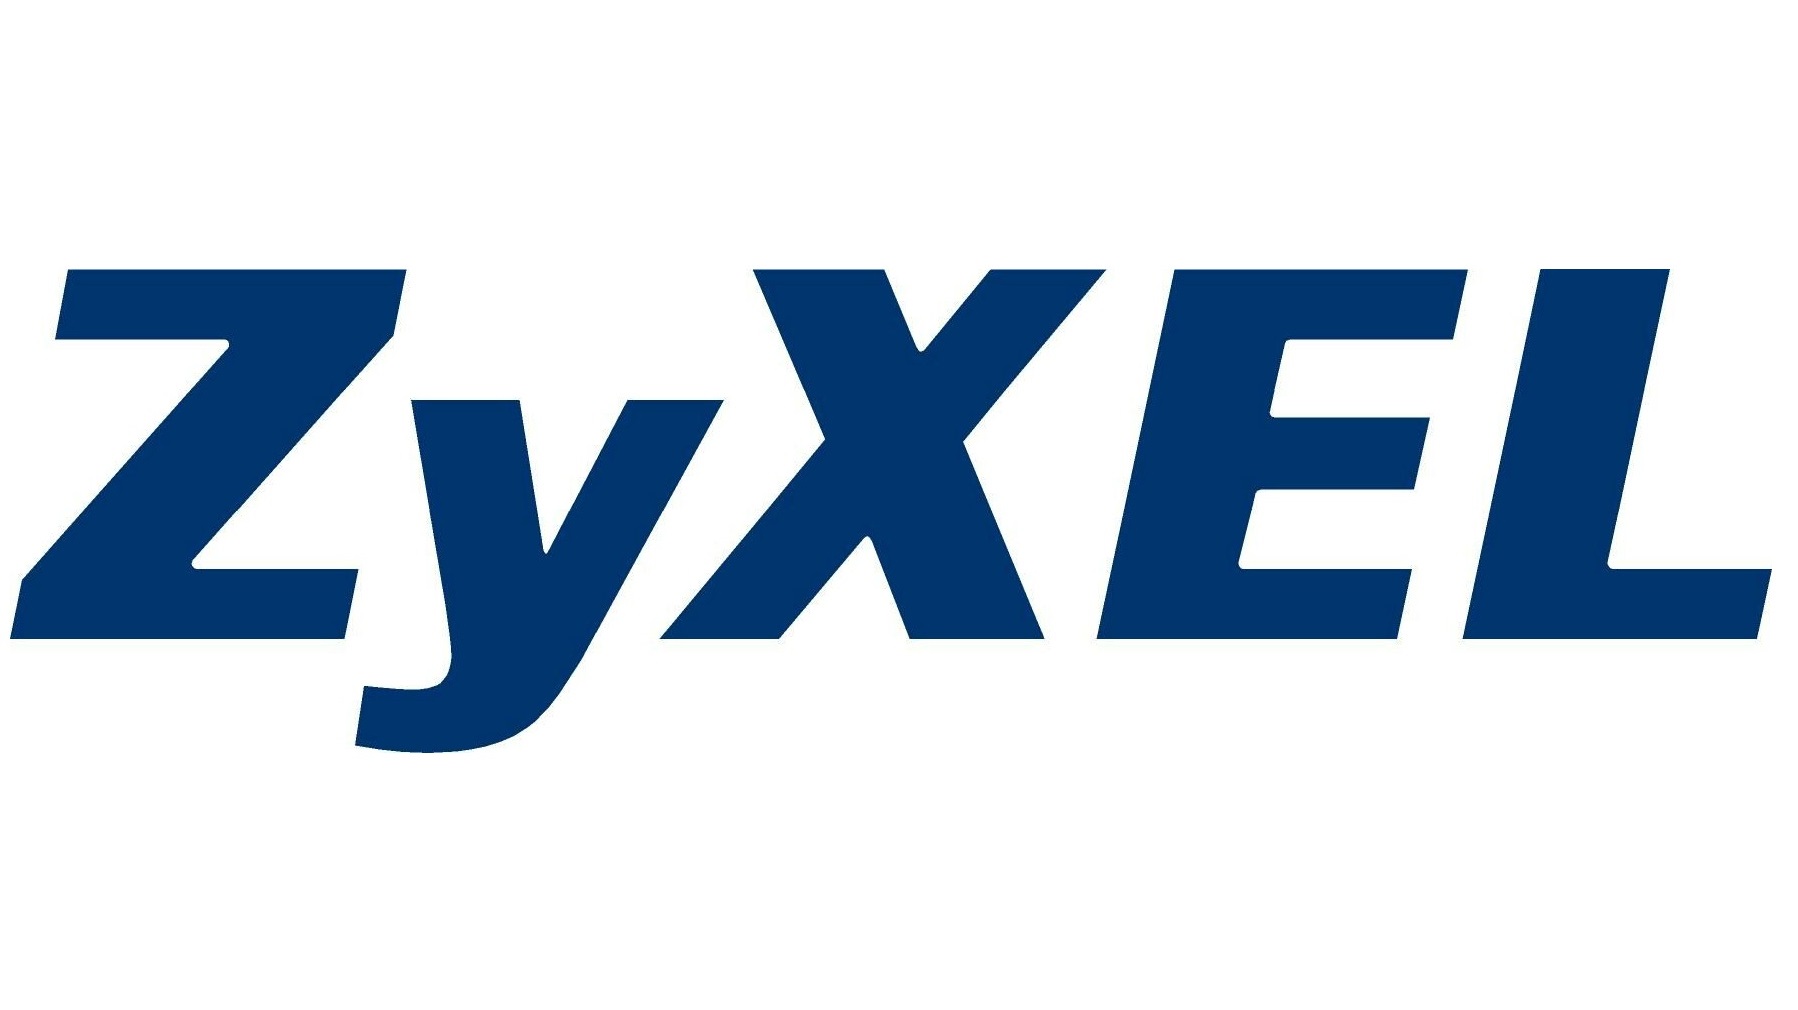 Zyxel Logo Wallpaper